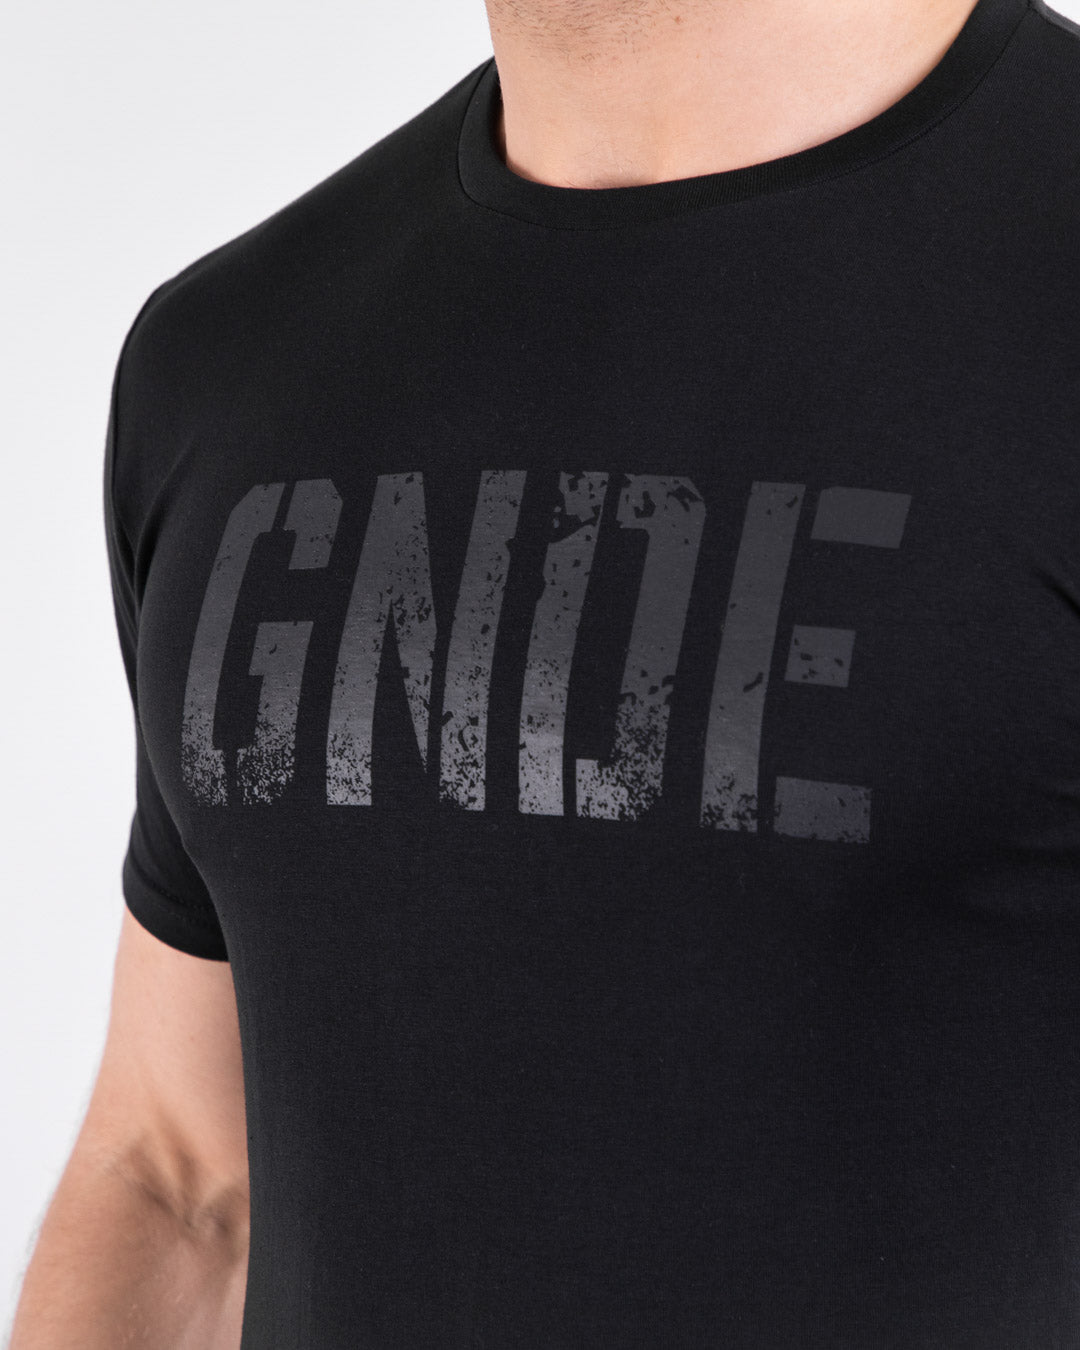 Grenade Mens T-Shirt GNDE Black